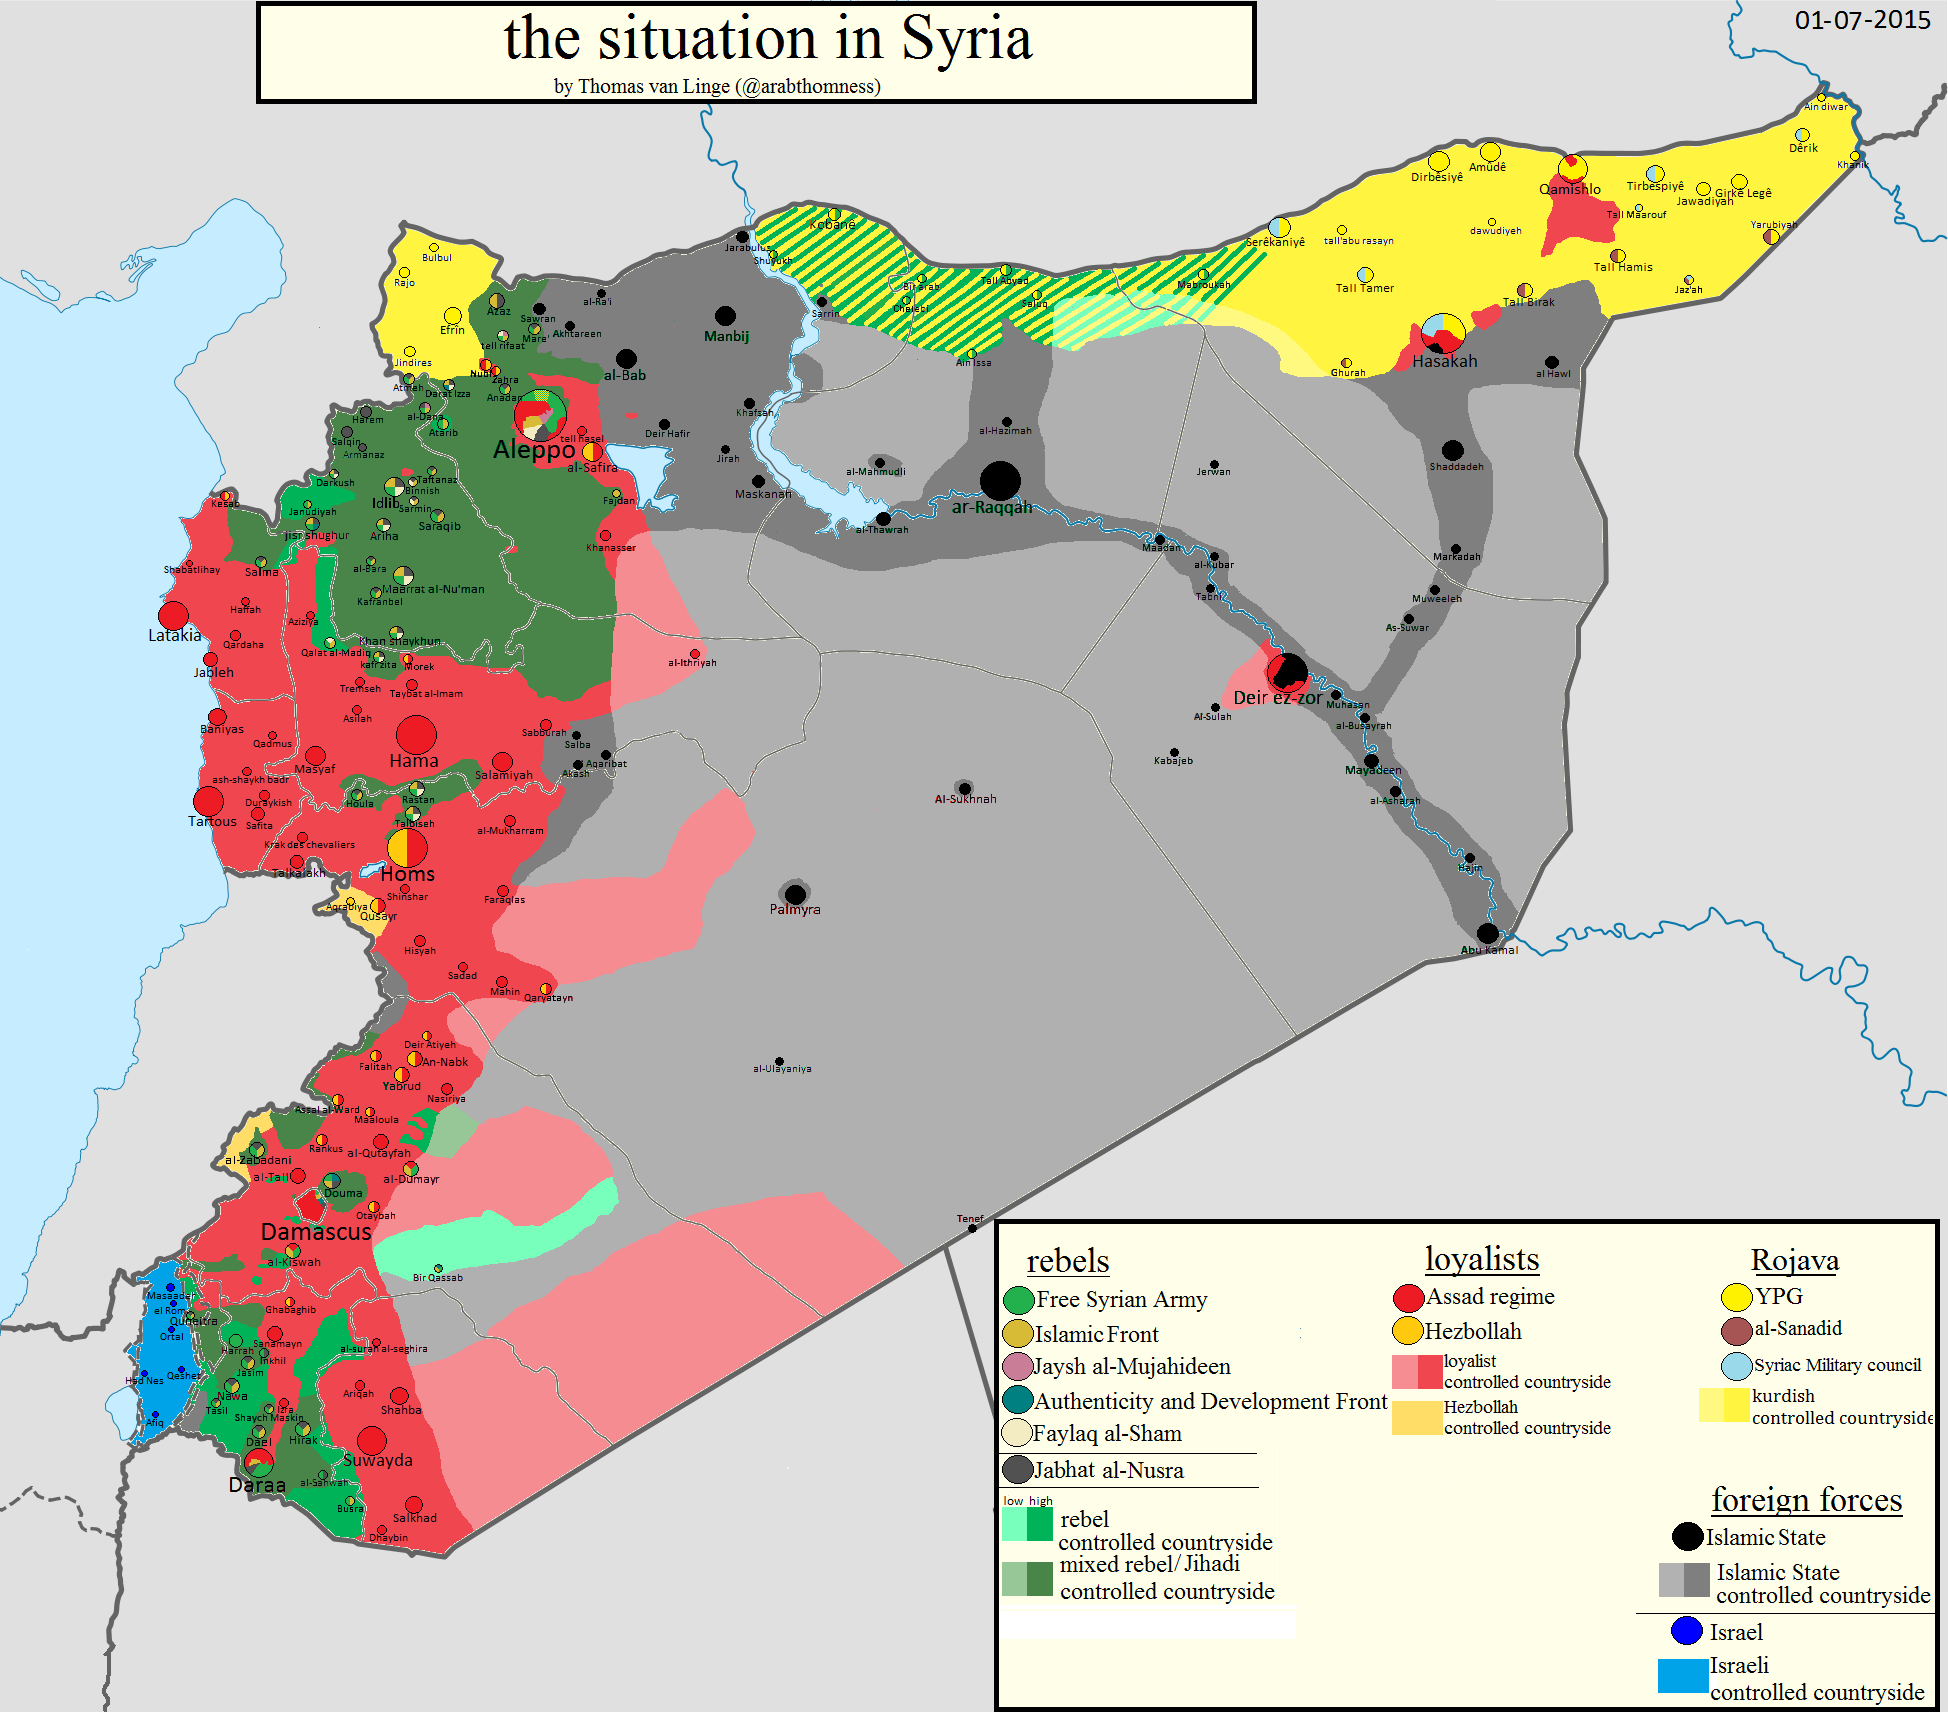 http://www.les-crises.fr/wp-content/uploads/2015/10/33-syrie-07-2015.png